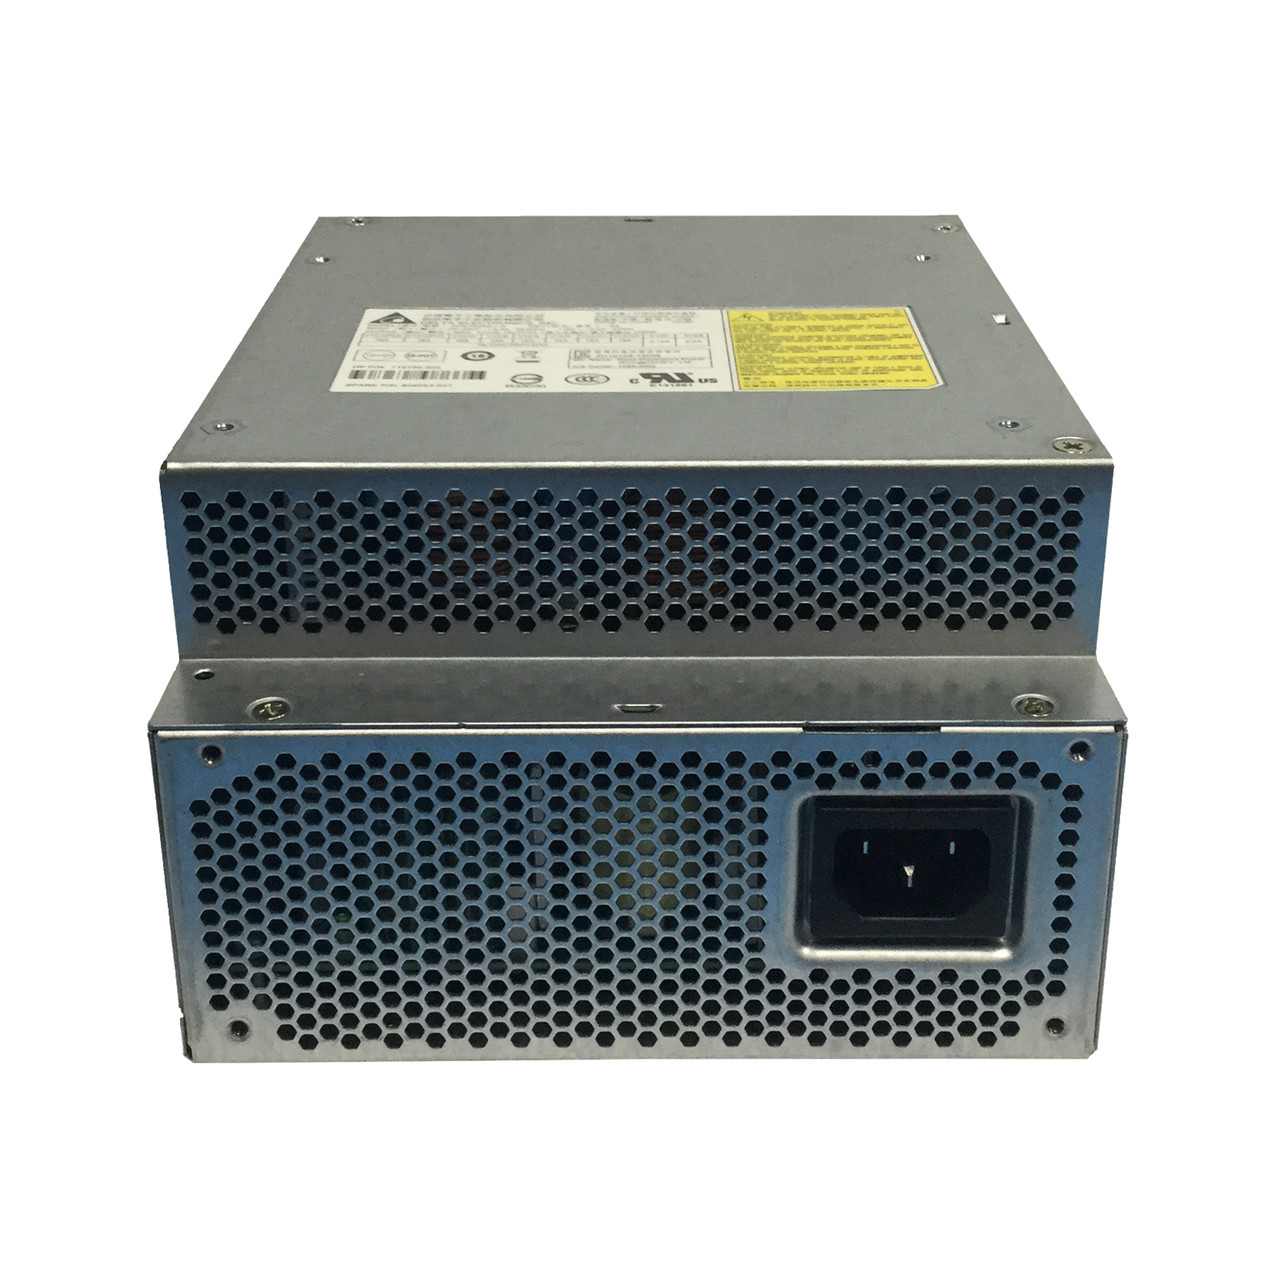 HP 858854-001 Z440 700W Power Supply DPS-700AB-1 A